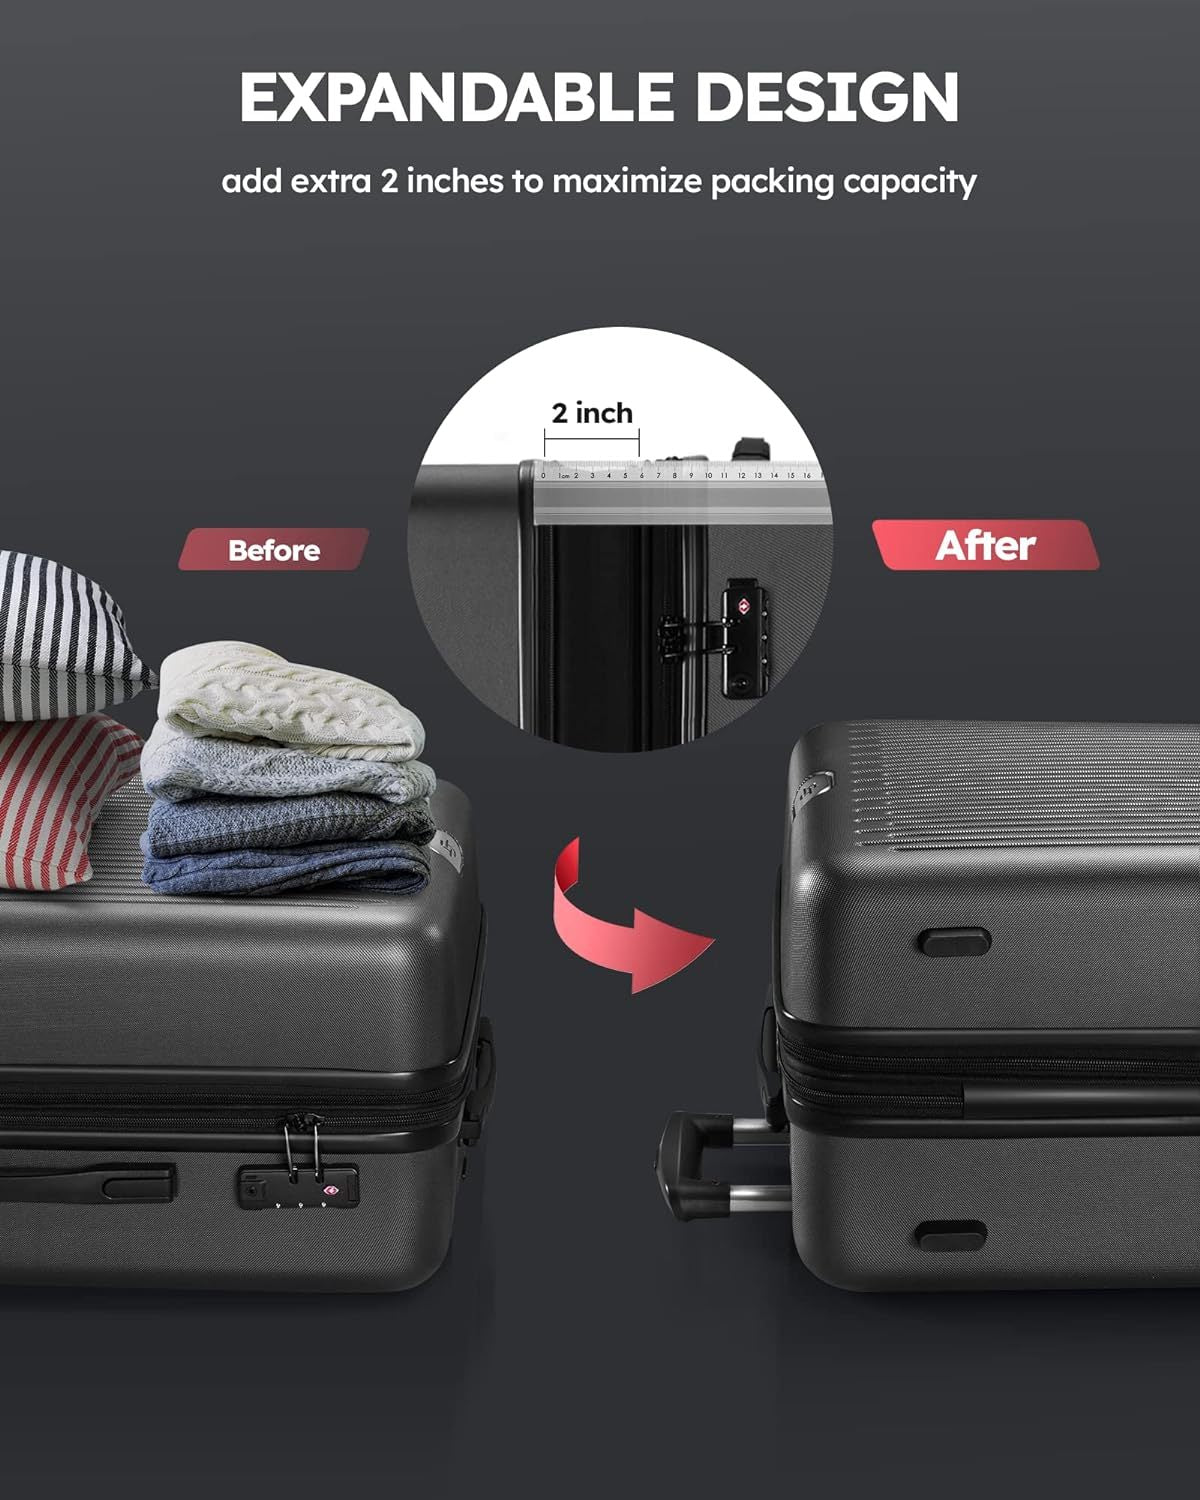 3 Piece Luggage Sets Expandable, Hardshell Travel black-abs